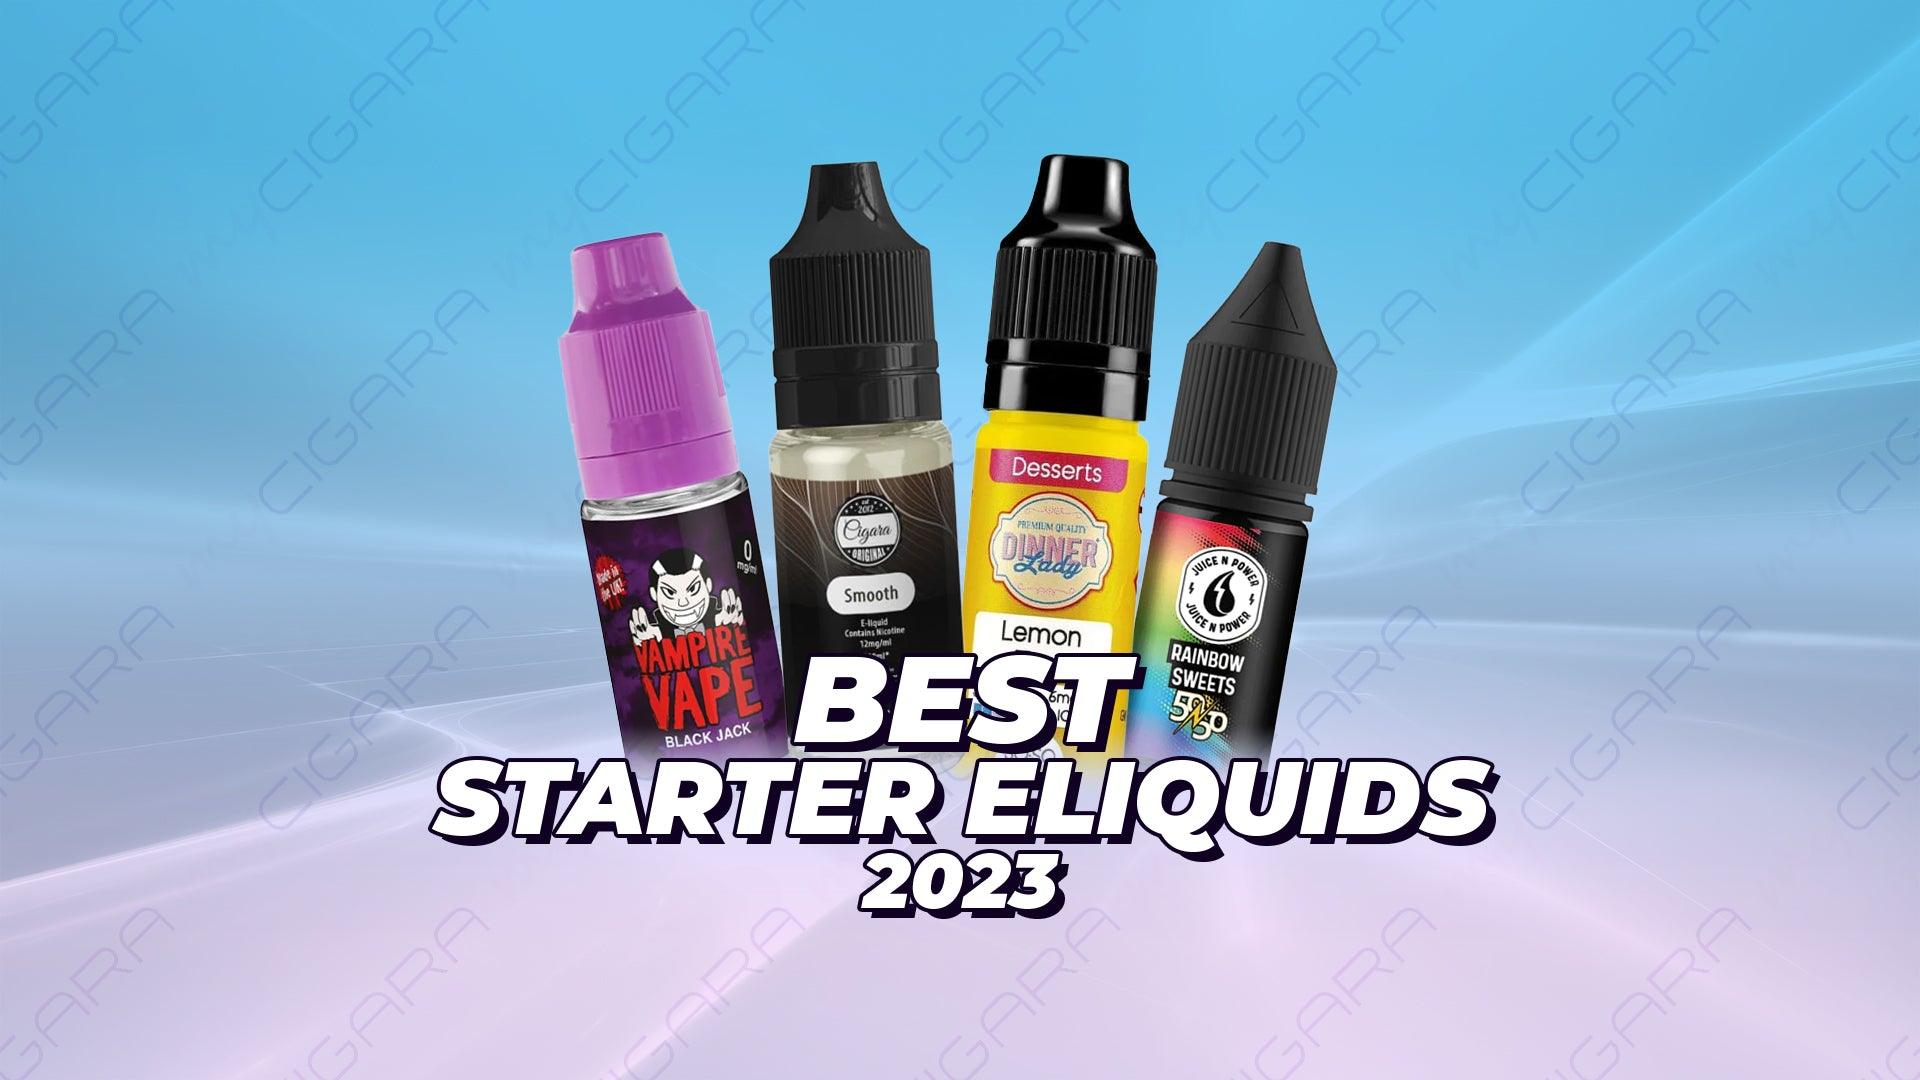 Best Starter Eliquids 2023 - Brand:Cigara Originals, Brand:Dinner Lady, Brand:Juice N Power, Brand:Vampire Vape, Category:E-Liquids, Sub Category:Starter Liquids